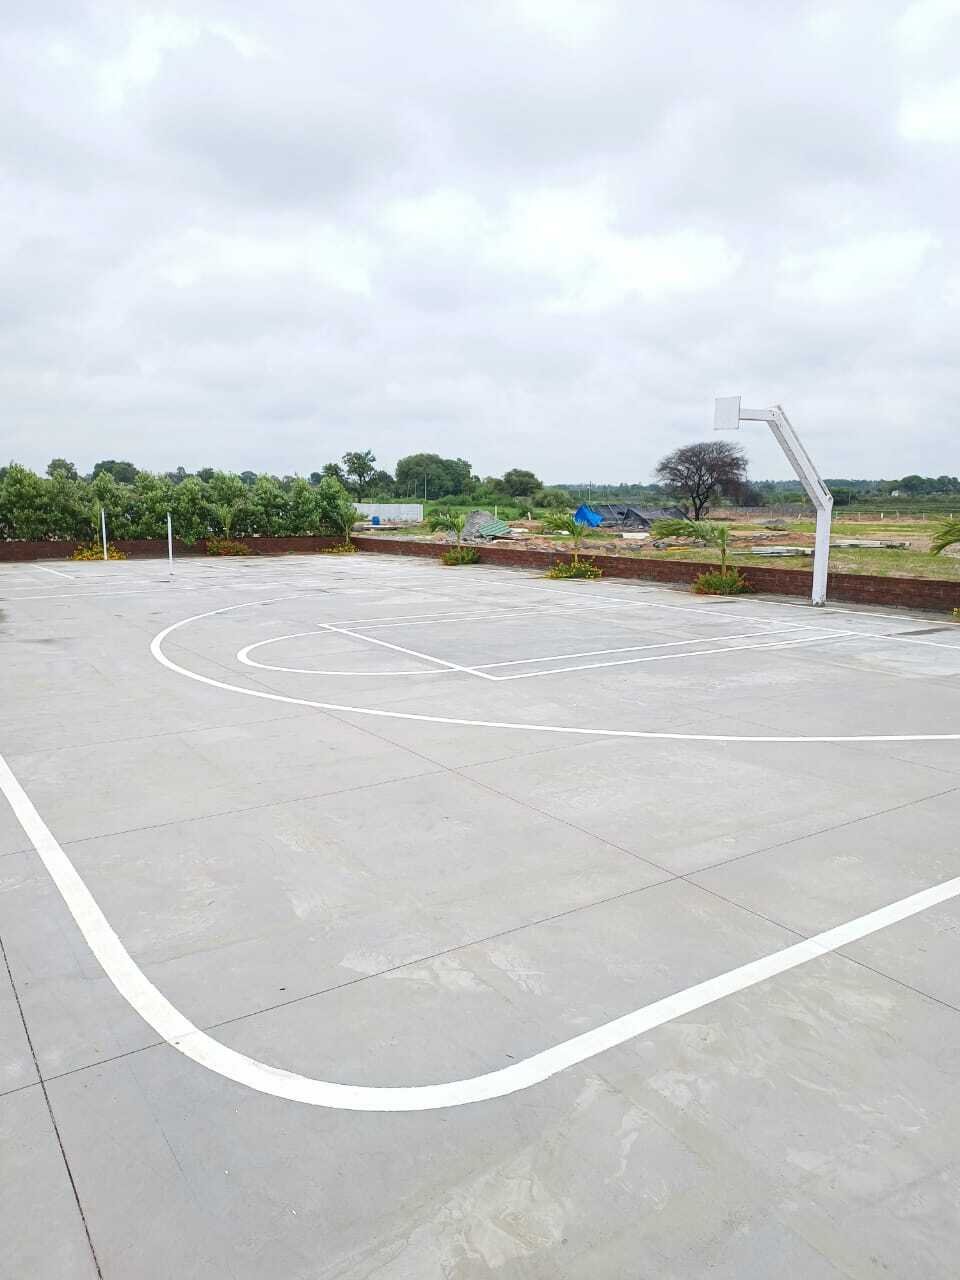 Elie Vistas_Basket ball court